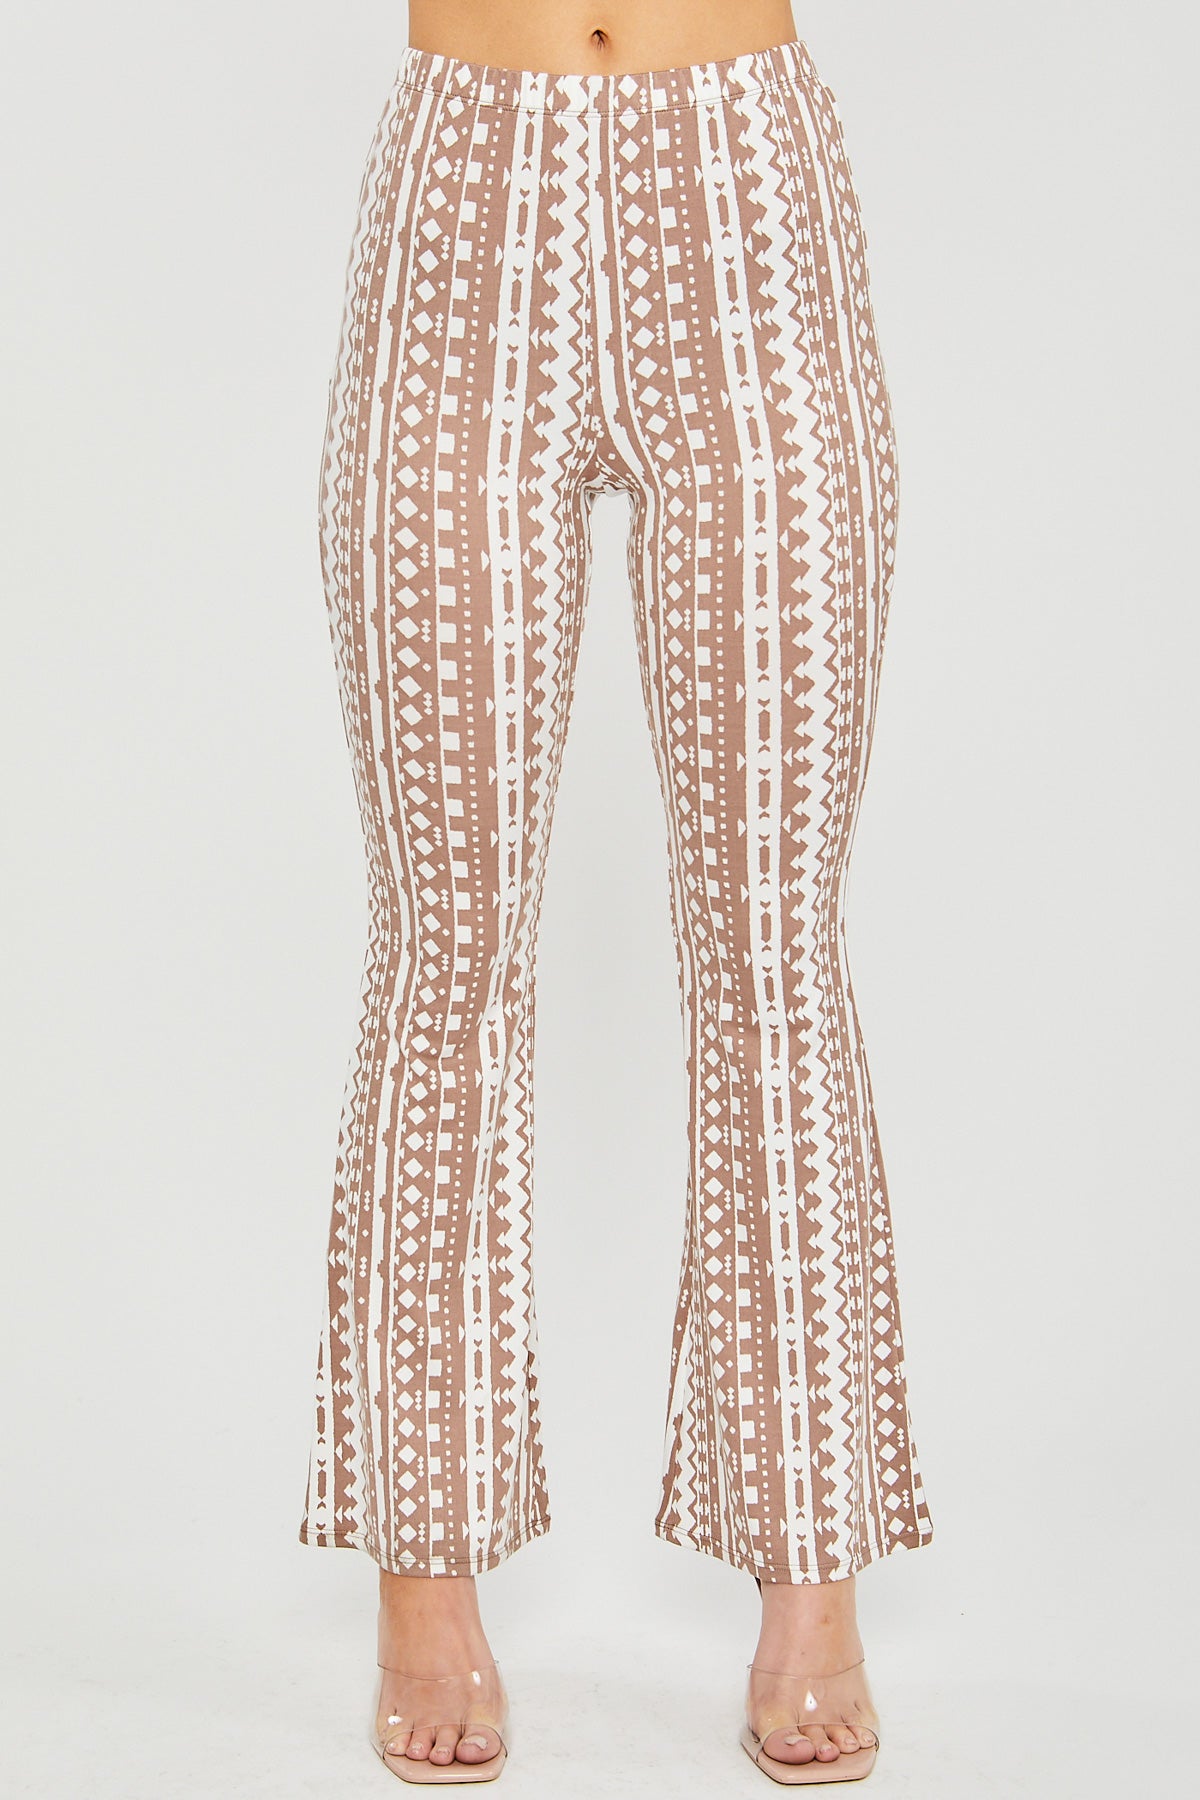 Knit Print Long Flare Pants - LA7 ONLINE Cocoa / M